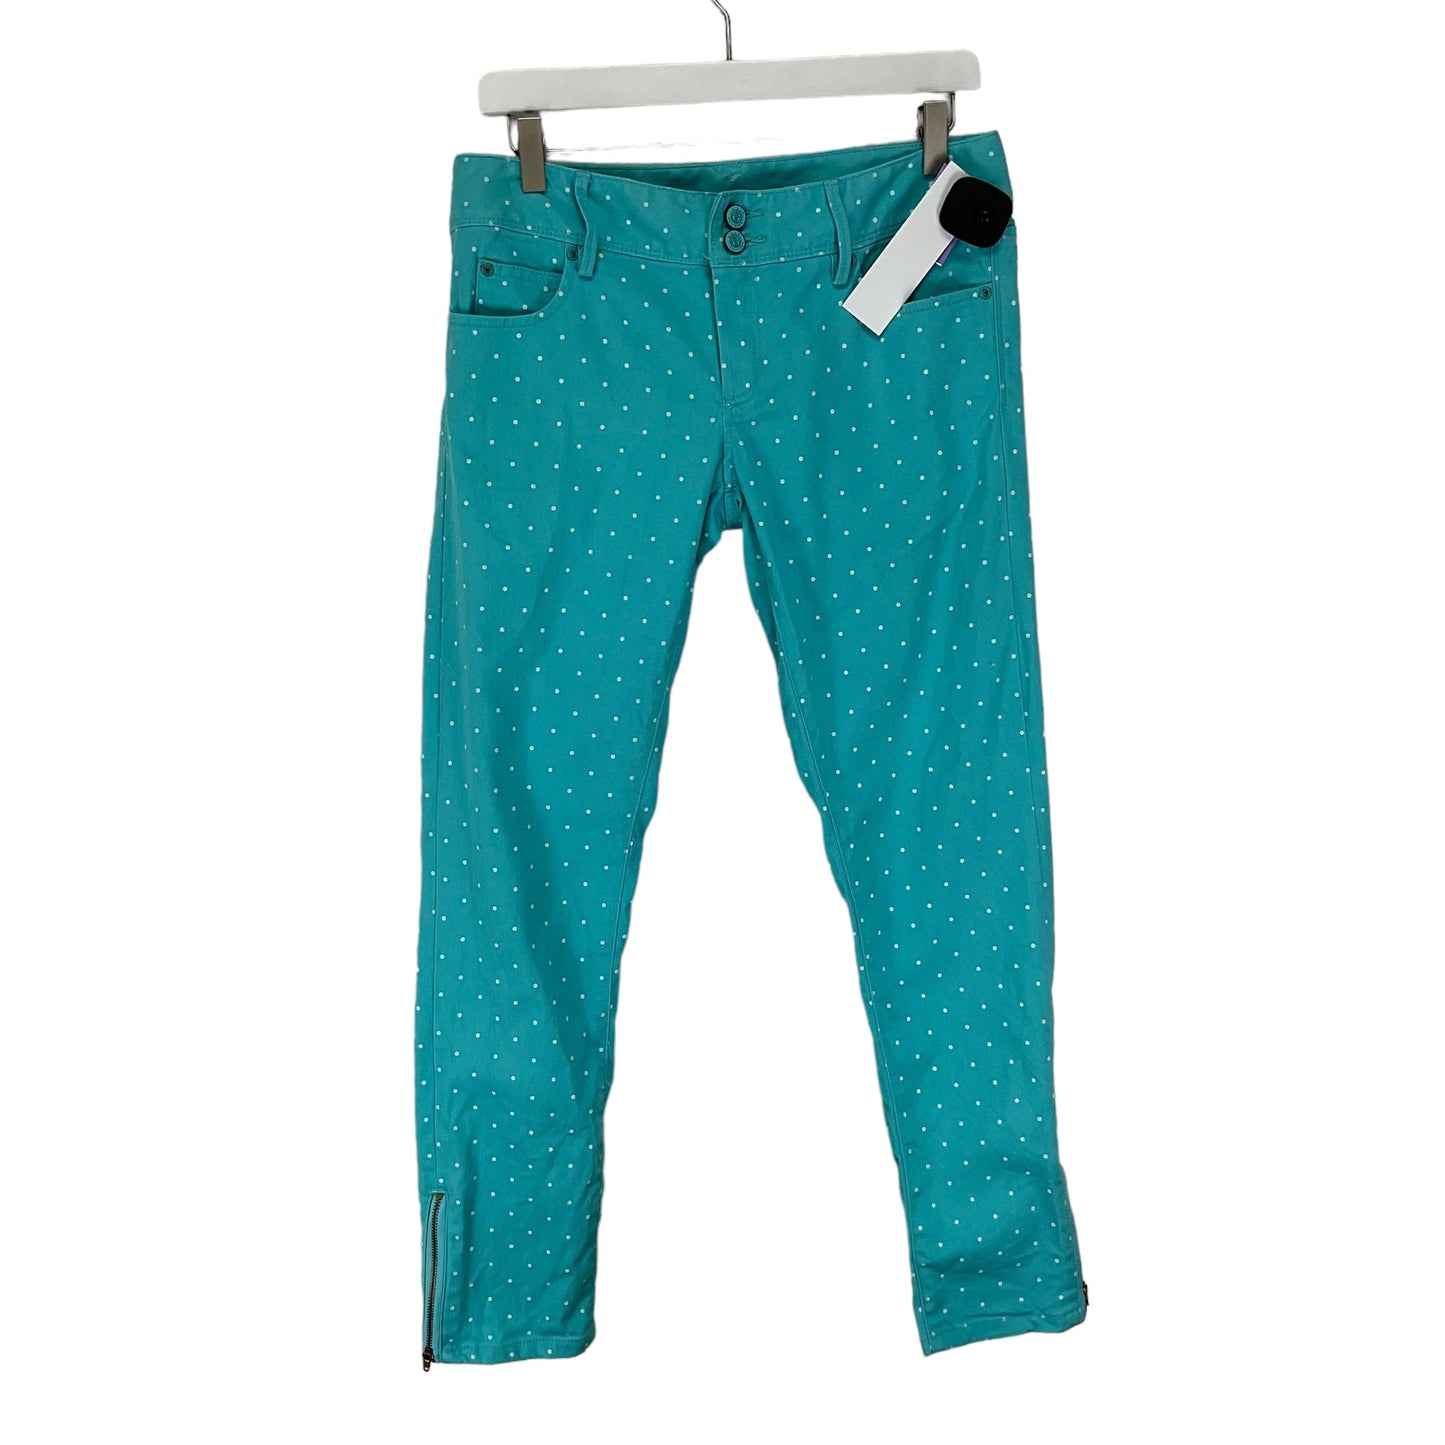 Blue Pants Designer Lilly Pulitzer, Size 4